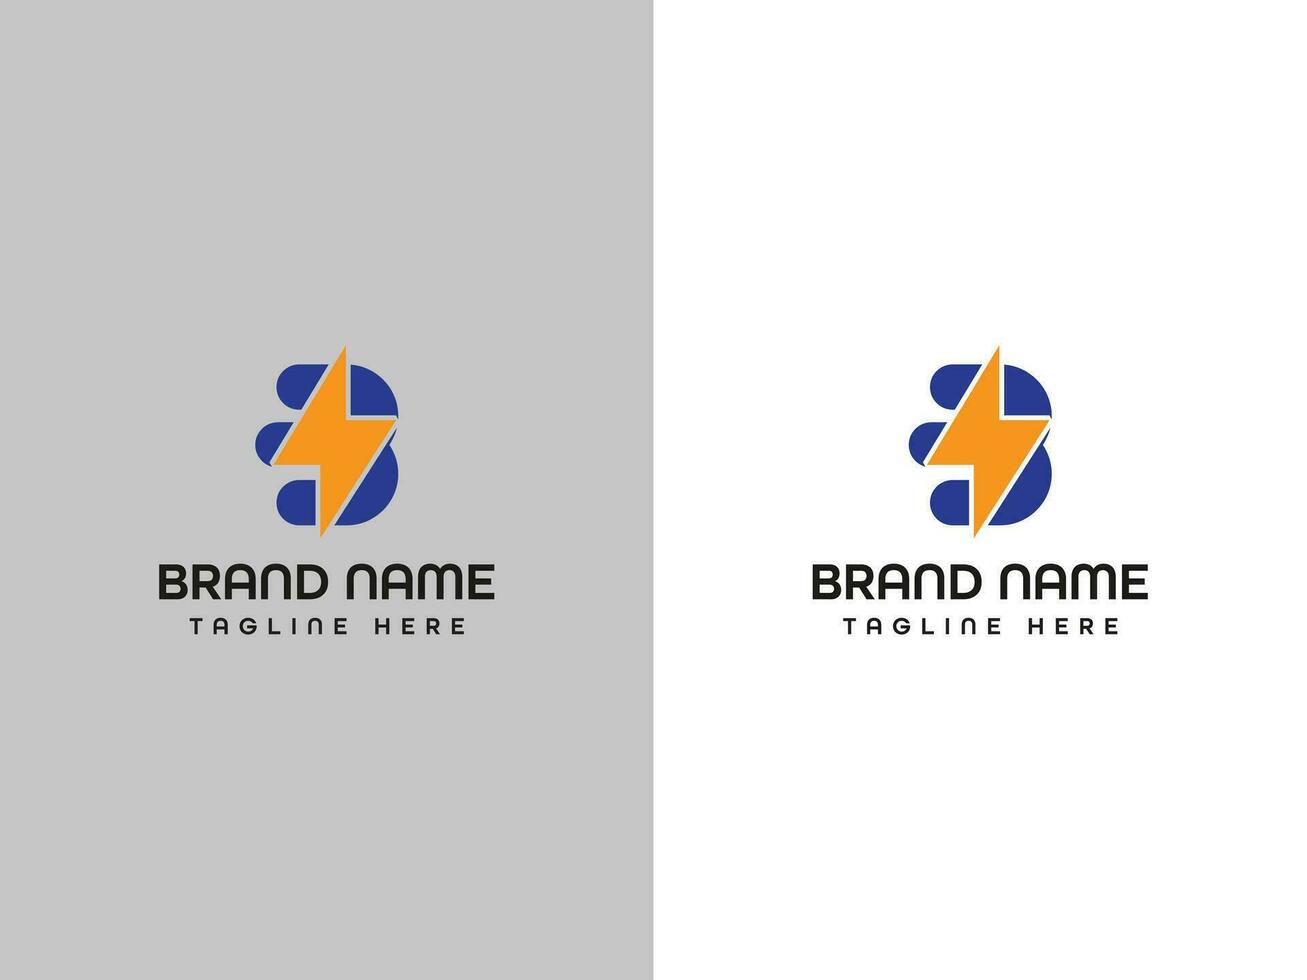 Bolzen Brief Logo Design vektor